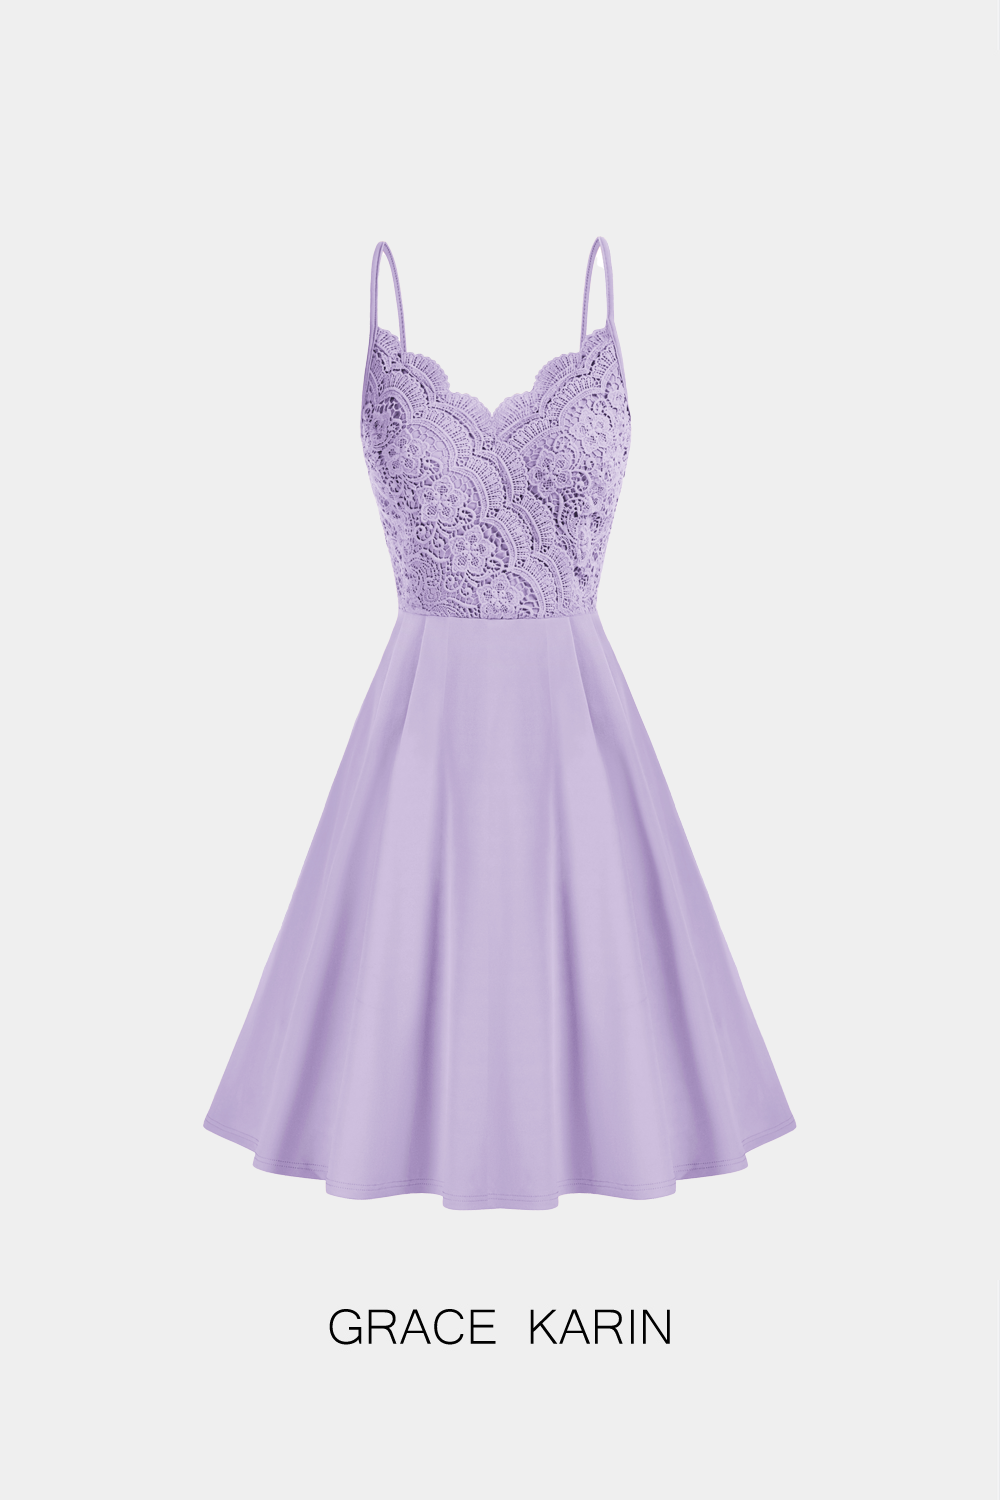 【$19.99 Flash Sale!】Grace Karin Women Lace Patchwork Cami Dress Spaghetti Straps V-Neck A-Line Dress